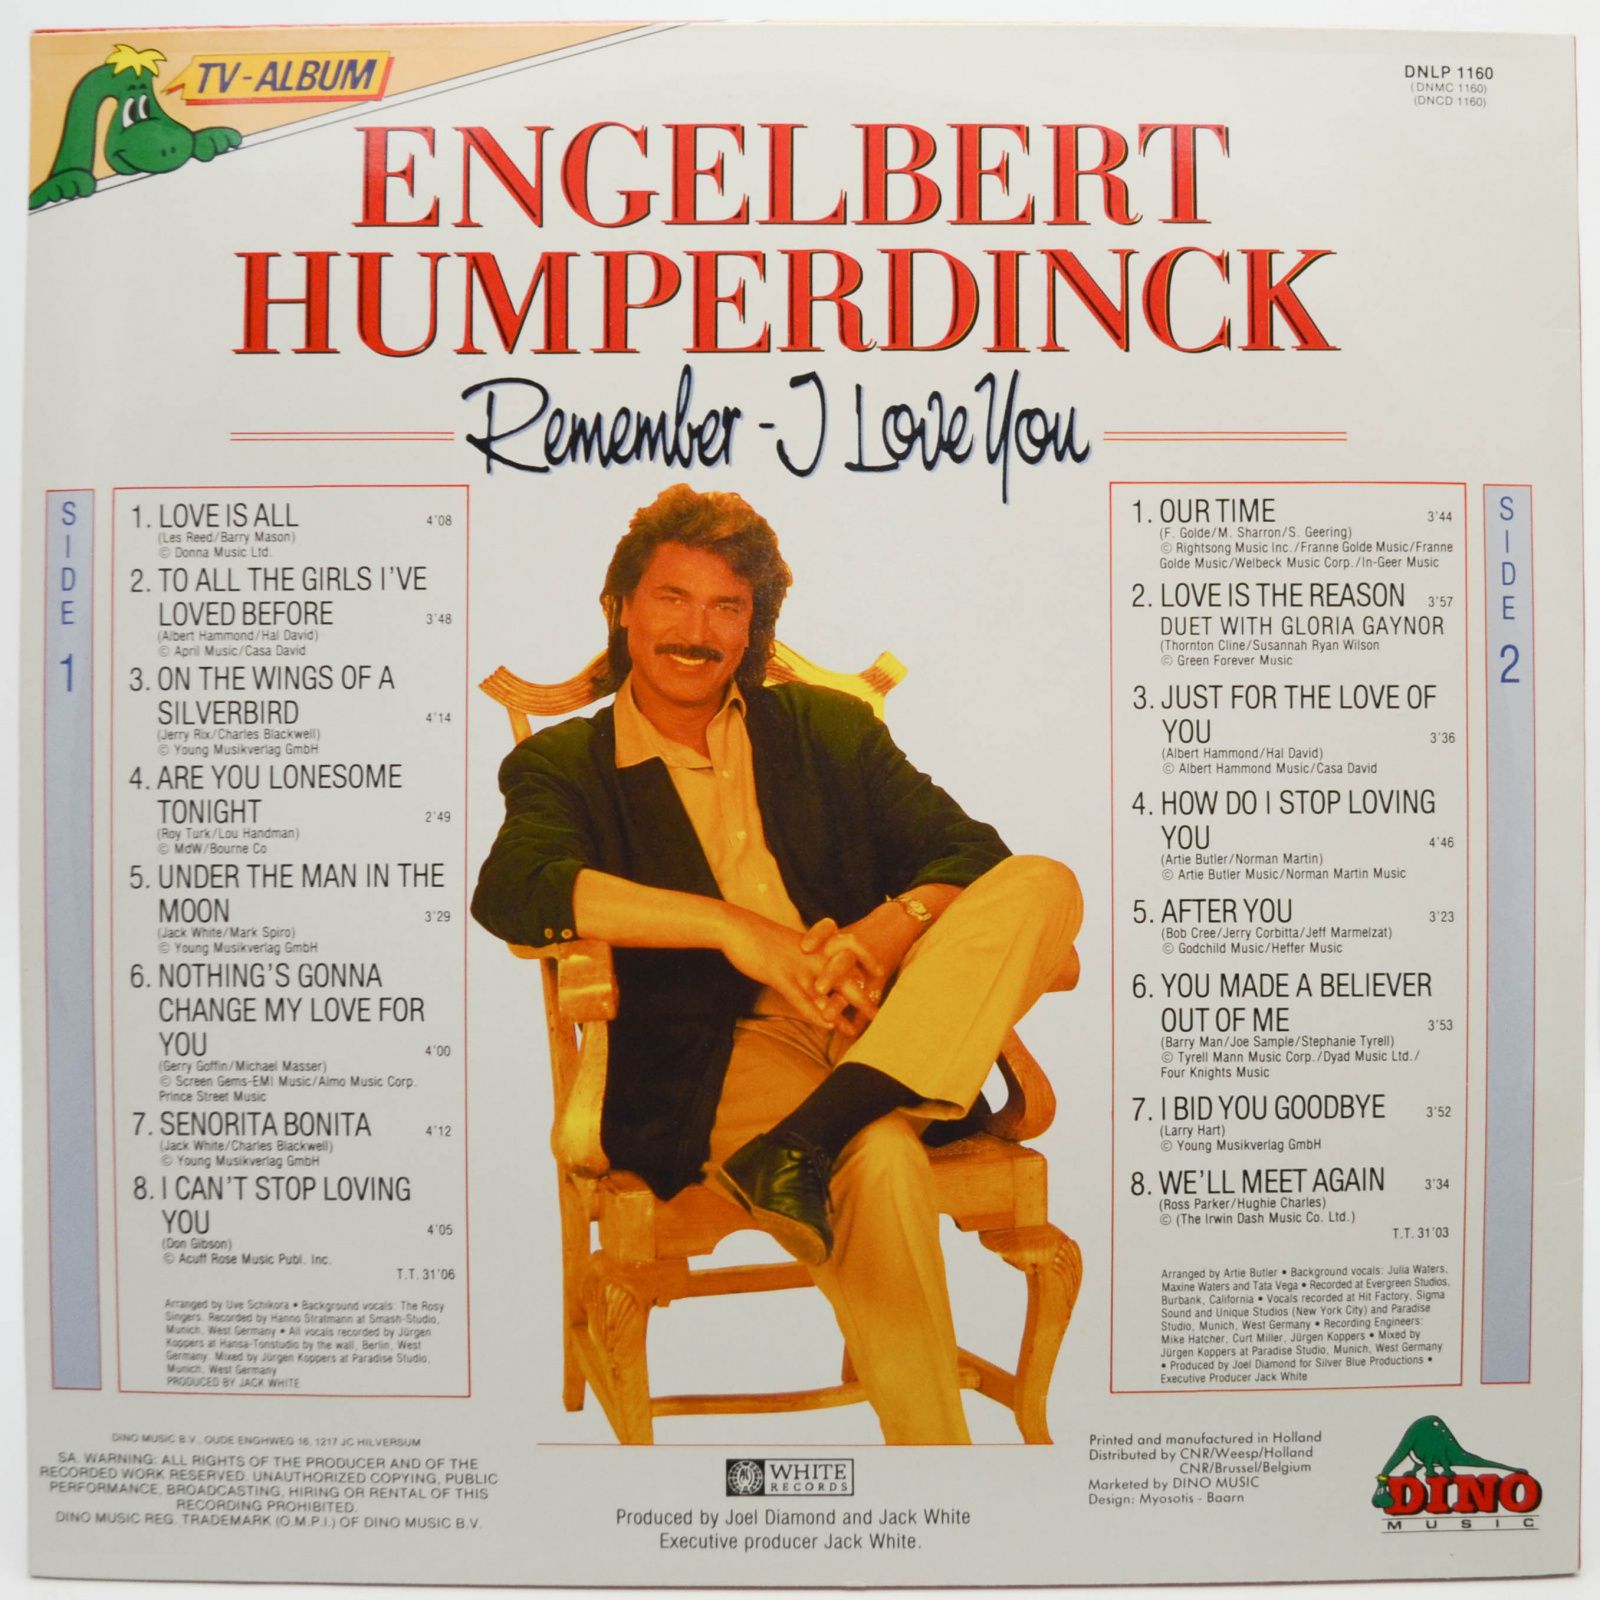 Engelbert Humperdinck — Remember - I Love You, 1987